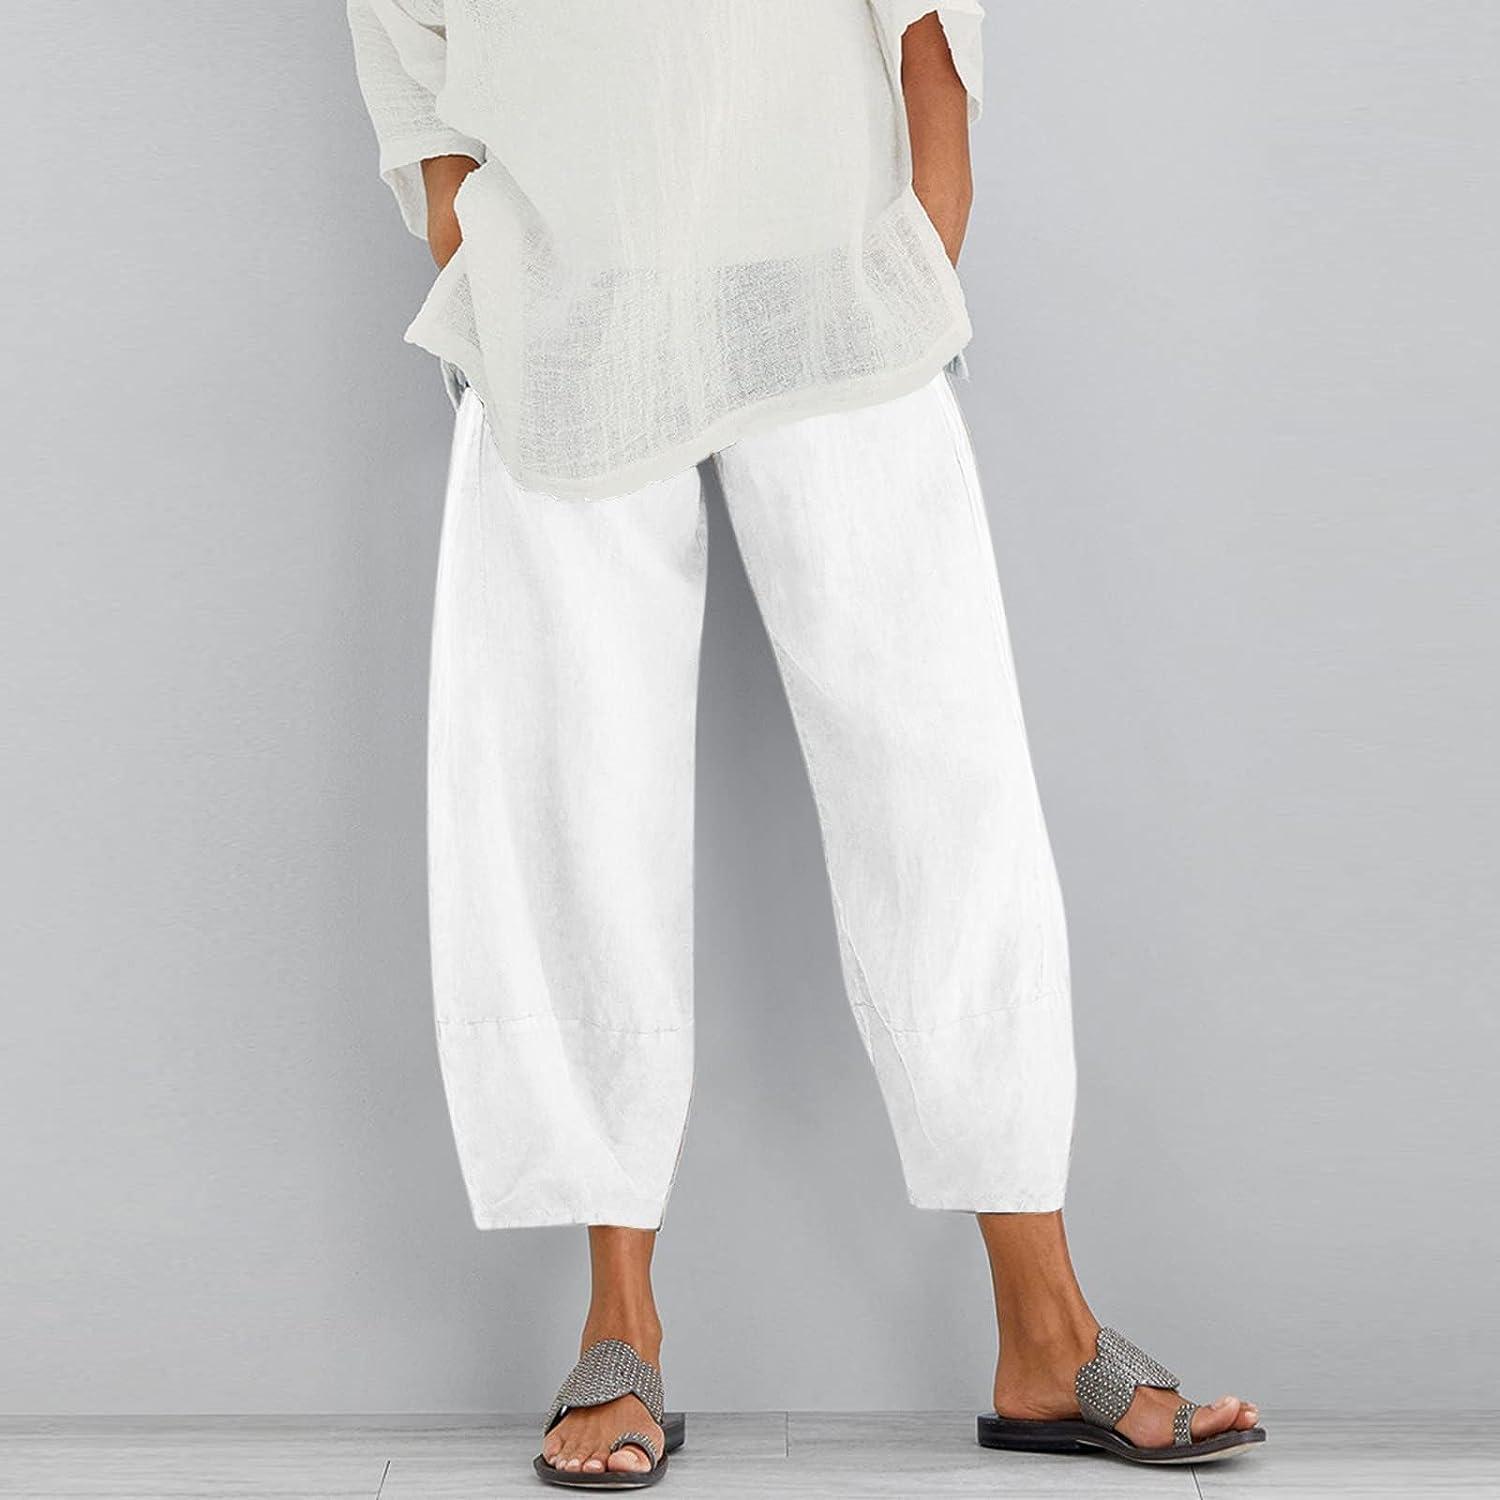 Kcocoo Capri Pants for Women, Womens Summer Cropped Cotton Linen Capris  Pants Casual Loose Fit Trousers Cotton Capri Pants(Black,S) at Amazon  Women's Clothing store